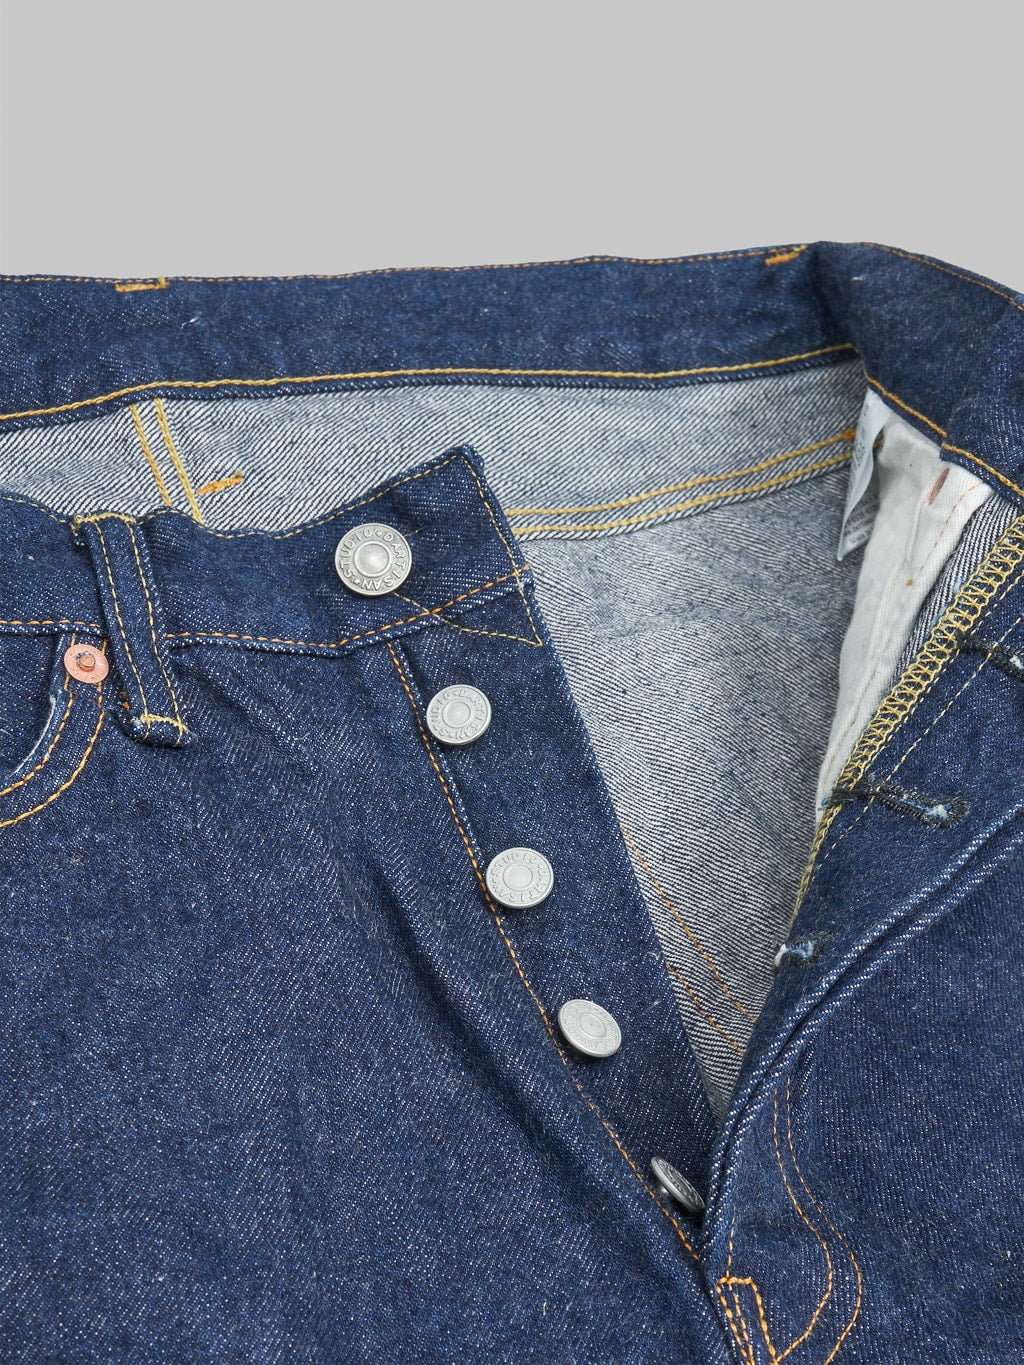 Studio D'Artisan natural indigo jeans buttons detail